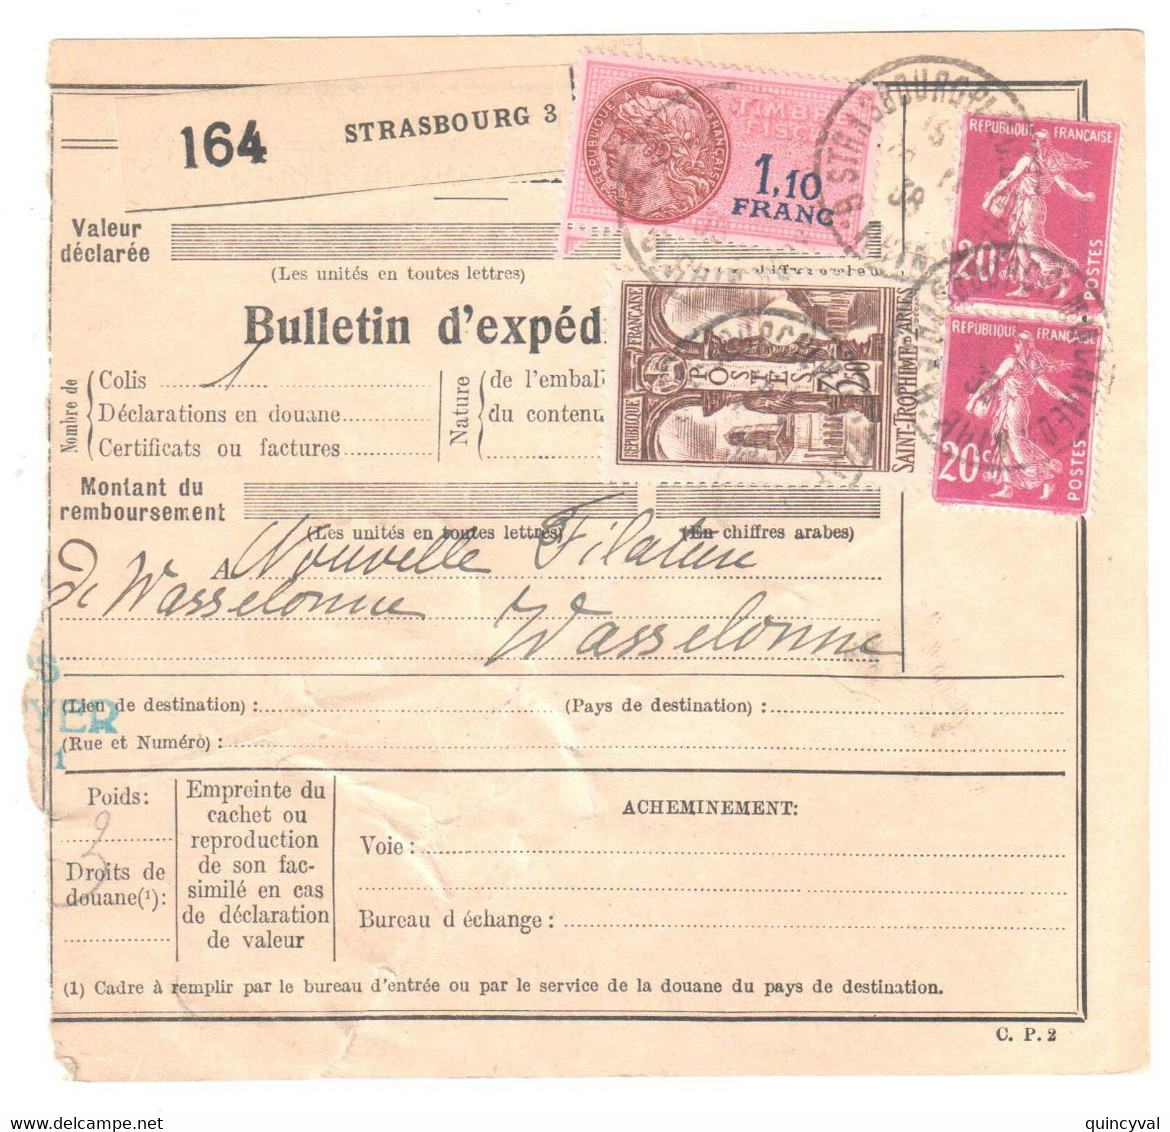 STRASBOURG Bas Rhin Bulletin D'expédition Alsace Lorraine 1938 3,50 F St Trophime 20c Semeuse Yv 302 139 - Covers & Documents